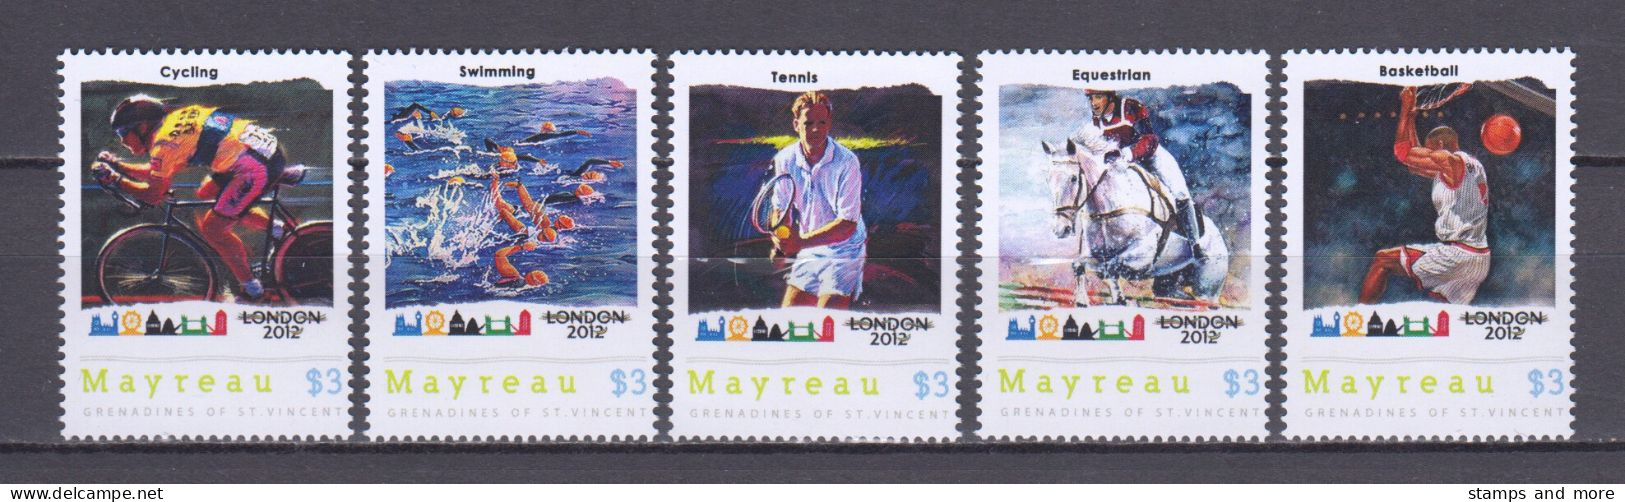 St Vincent Grenadines (Mayreau)  - MNH Set - SUMMER OLYMPICS LONDON 2012 - Summer 2012: London